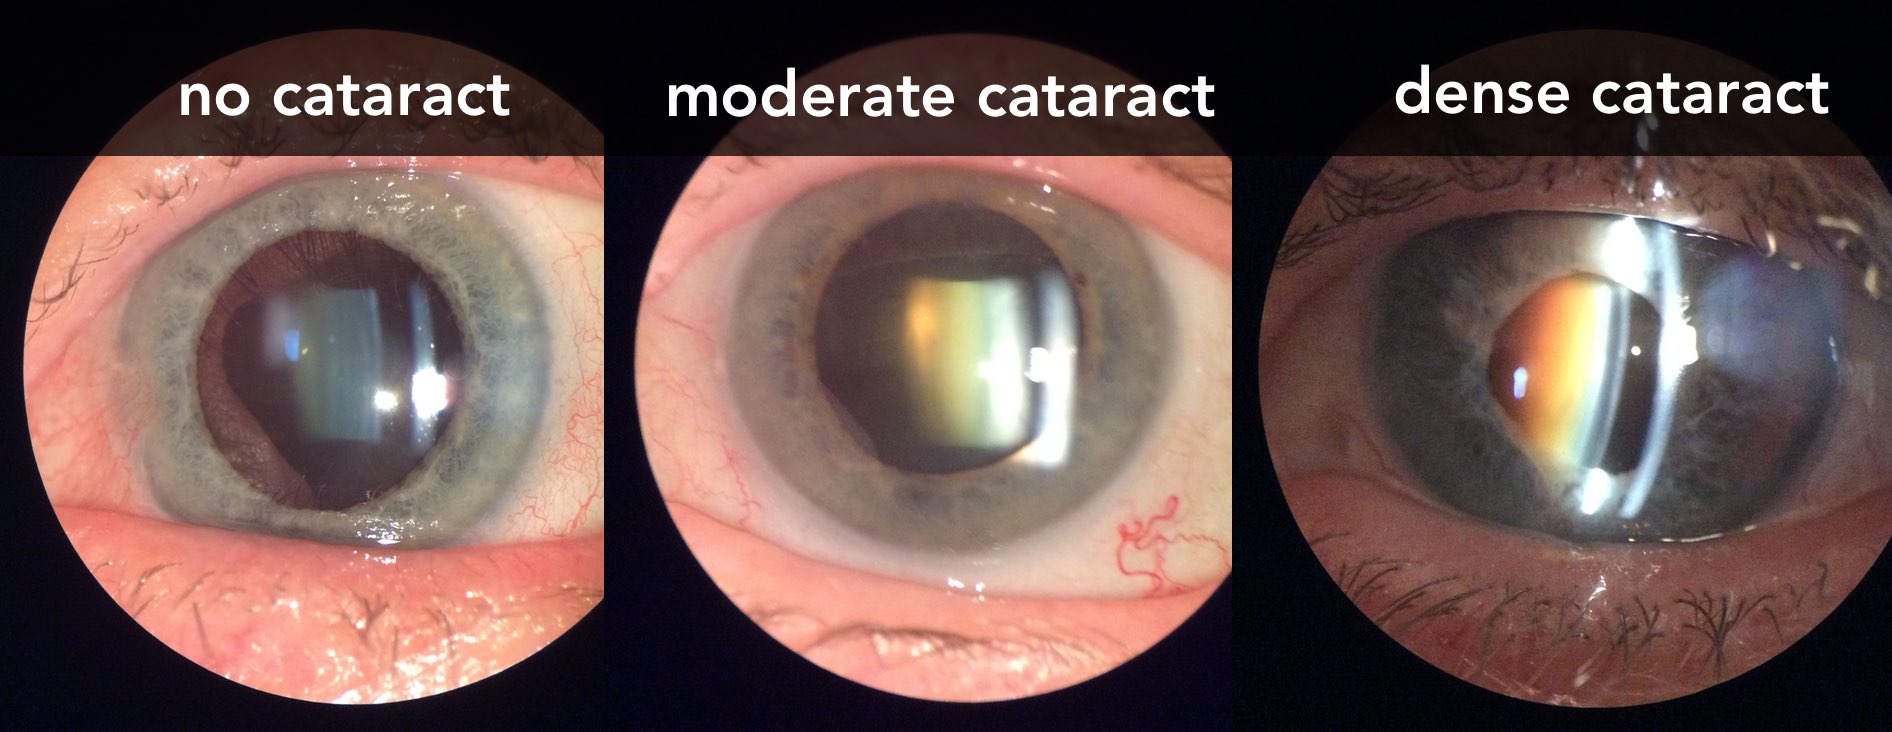 cataract progression